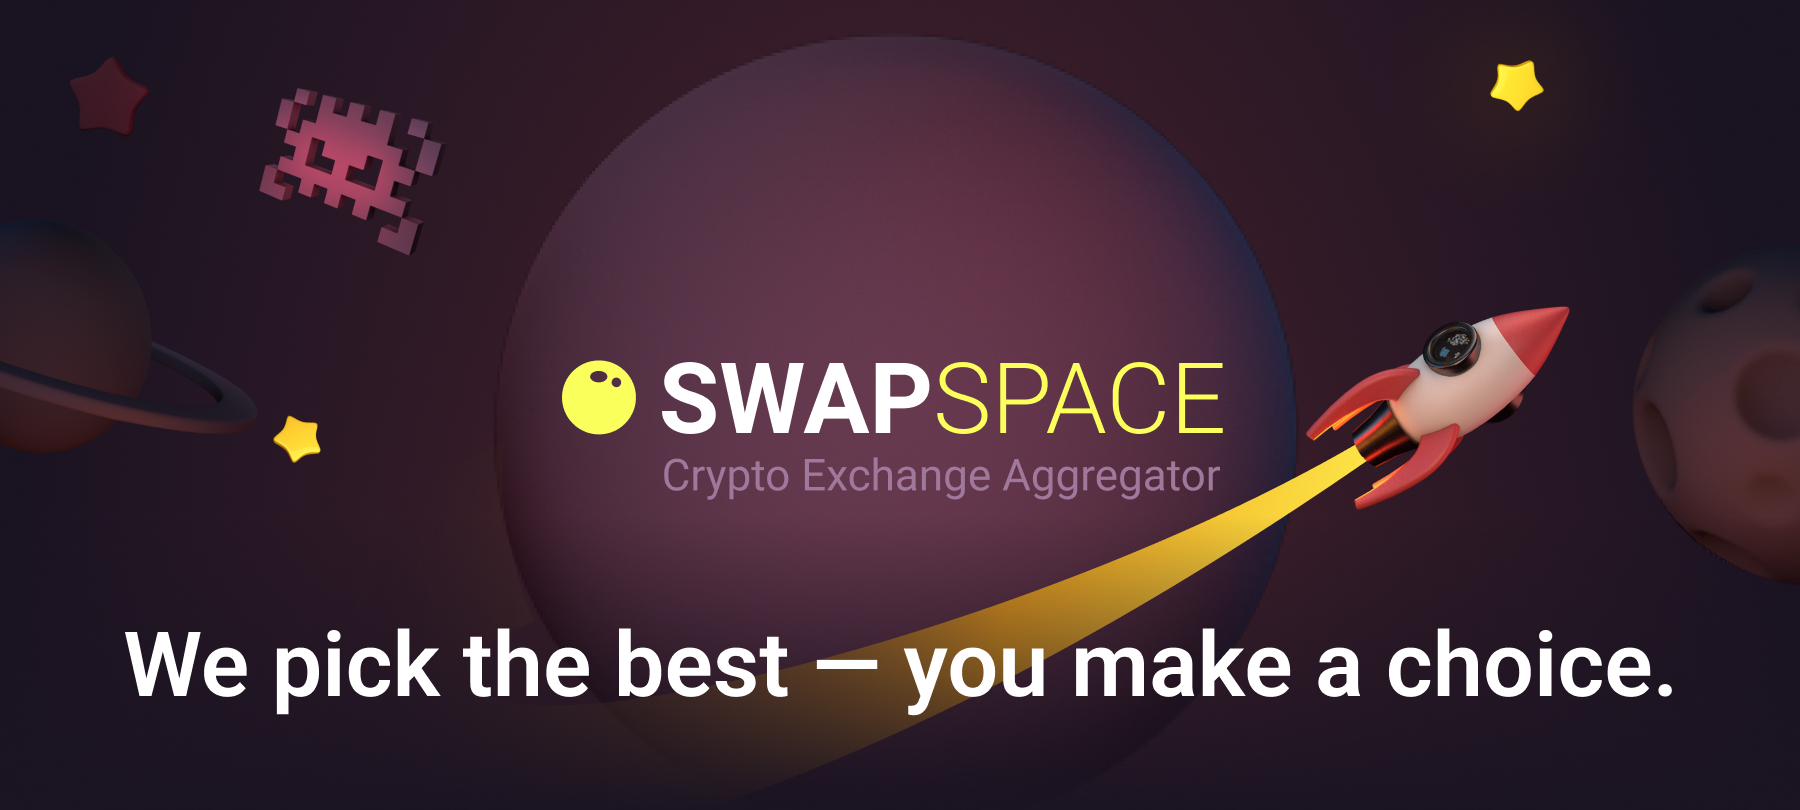 Why SwapSpace?